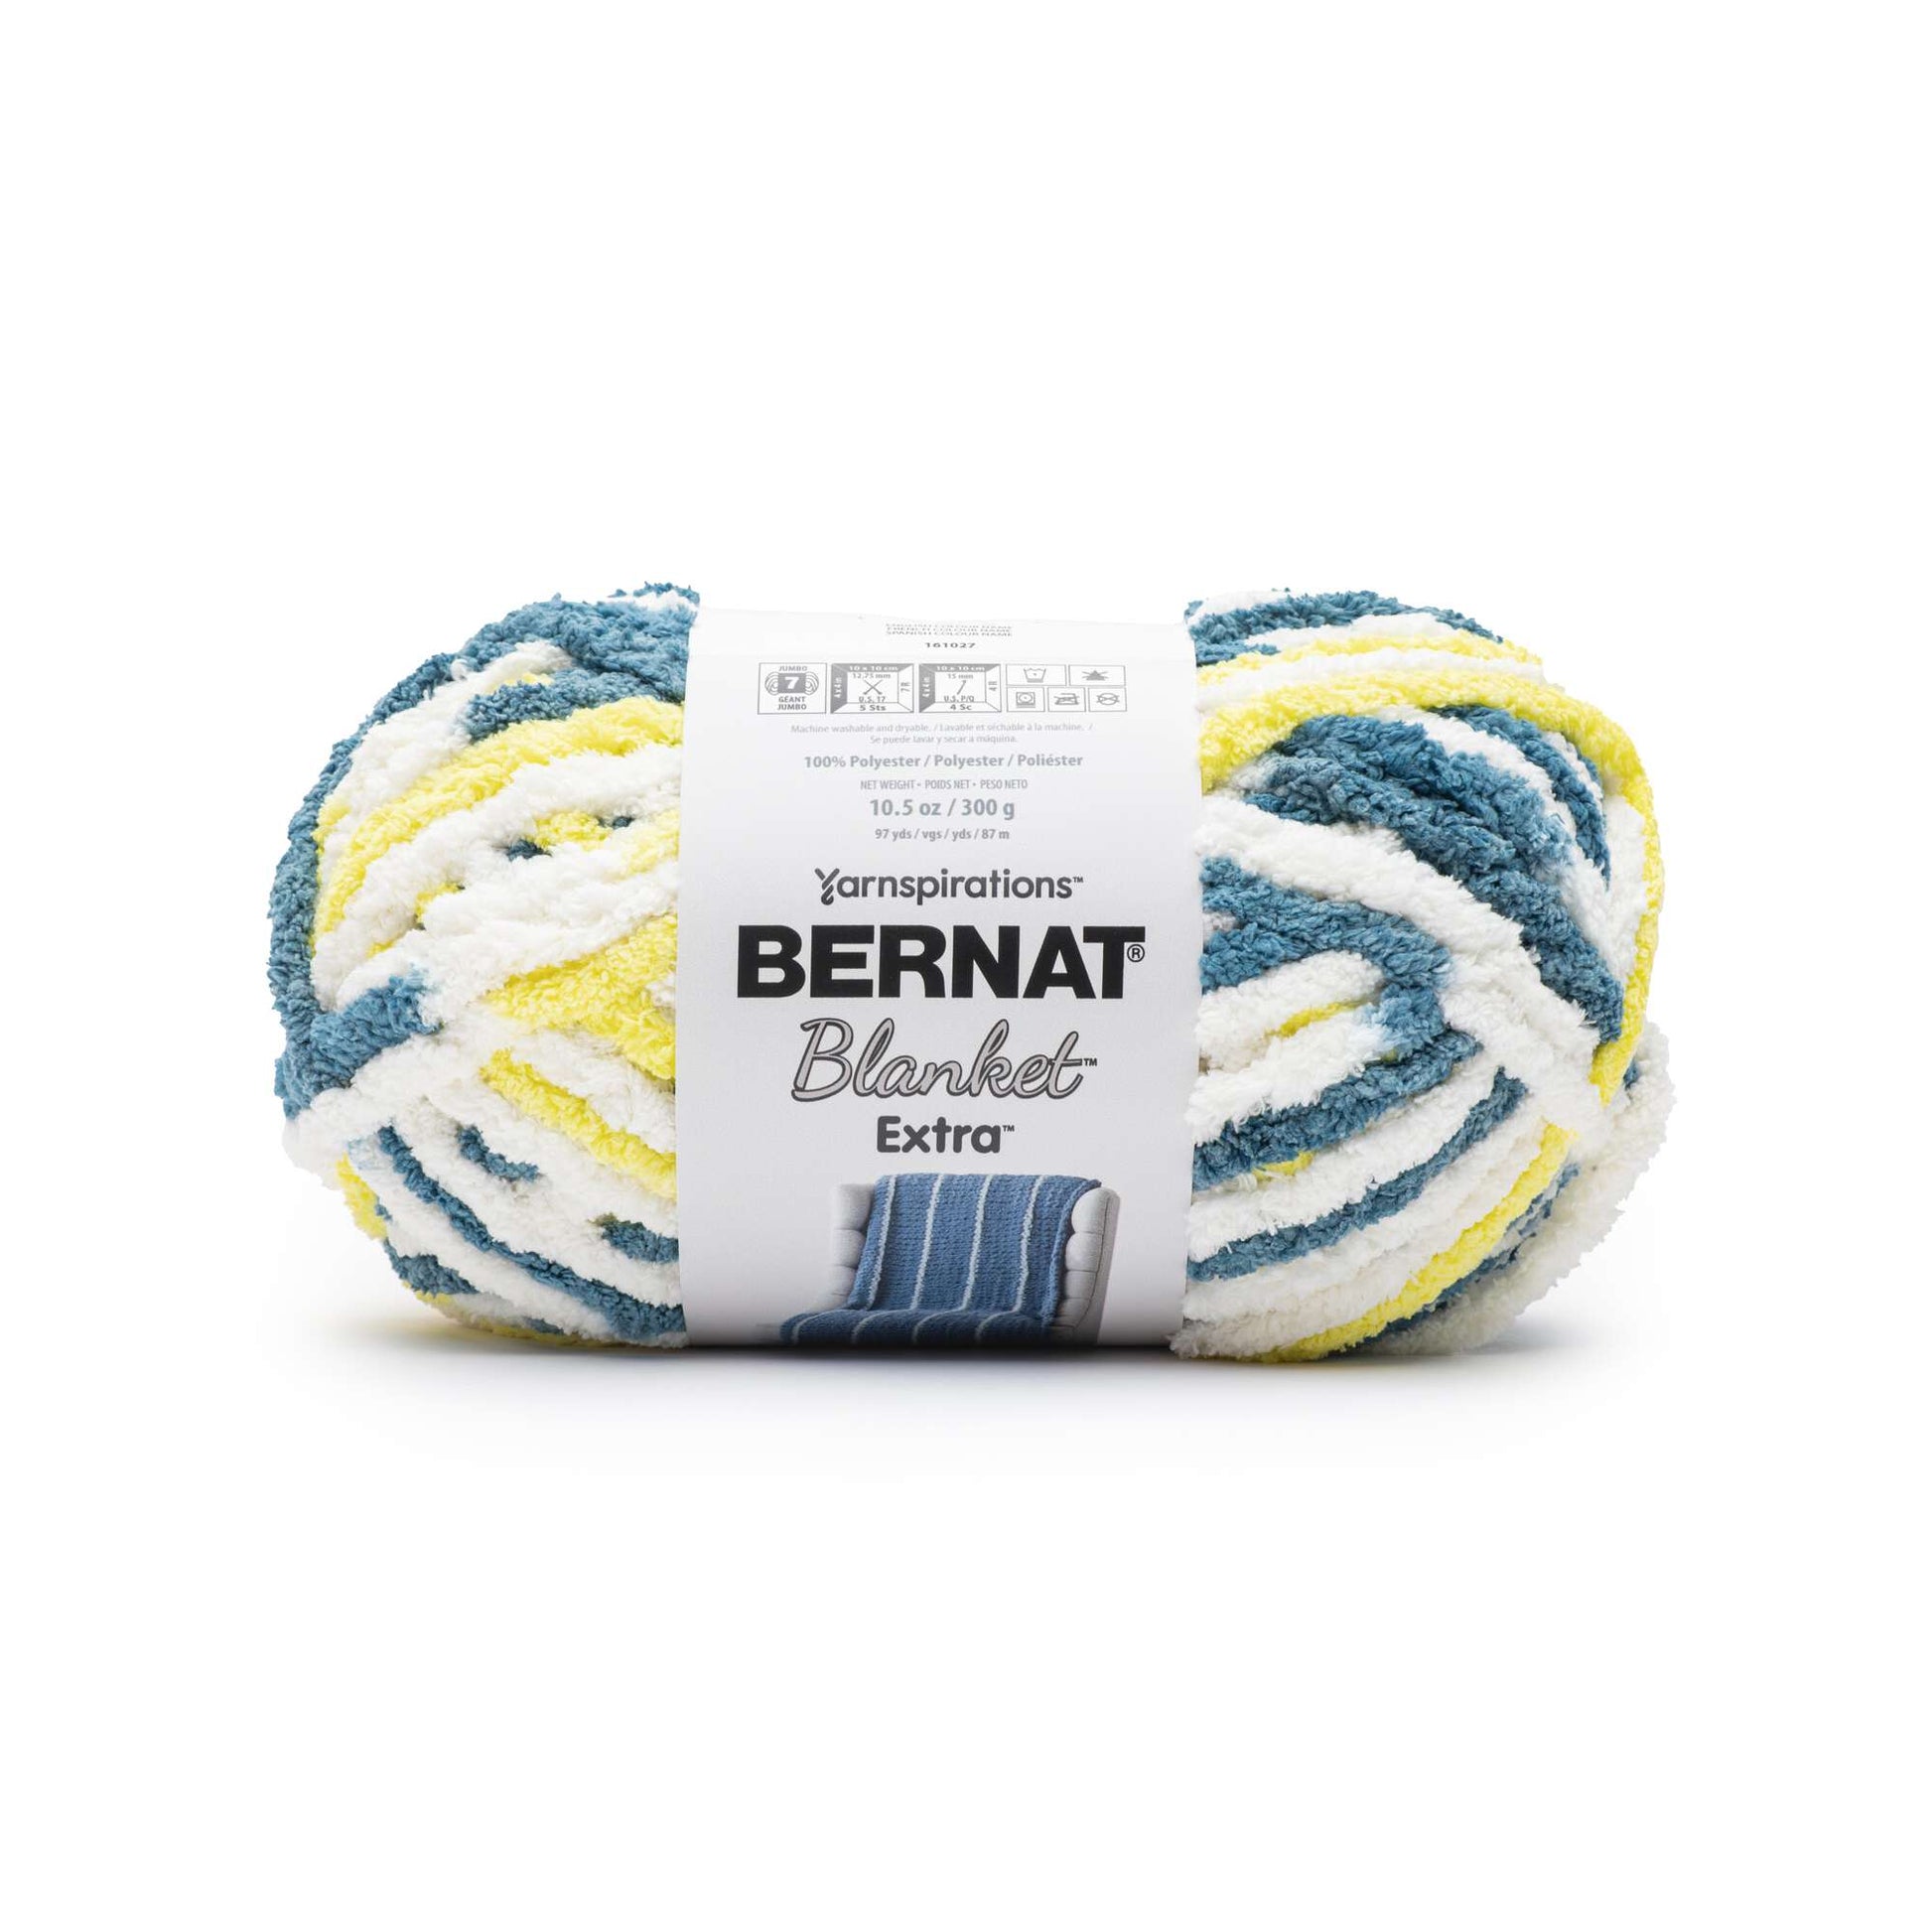 Bernat Blanket Extra Yarn (300g/10.5oz), Yarnspirations in 2023